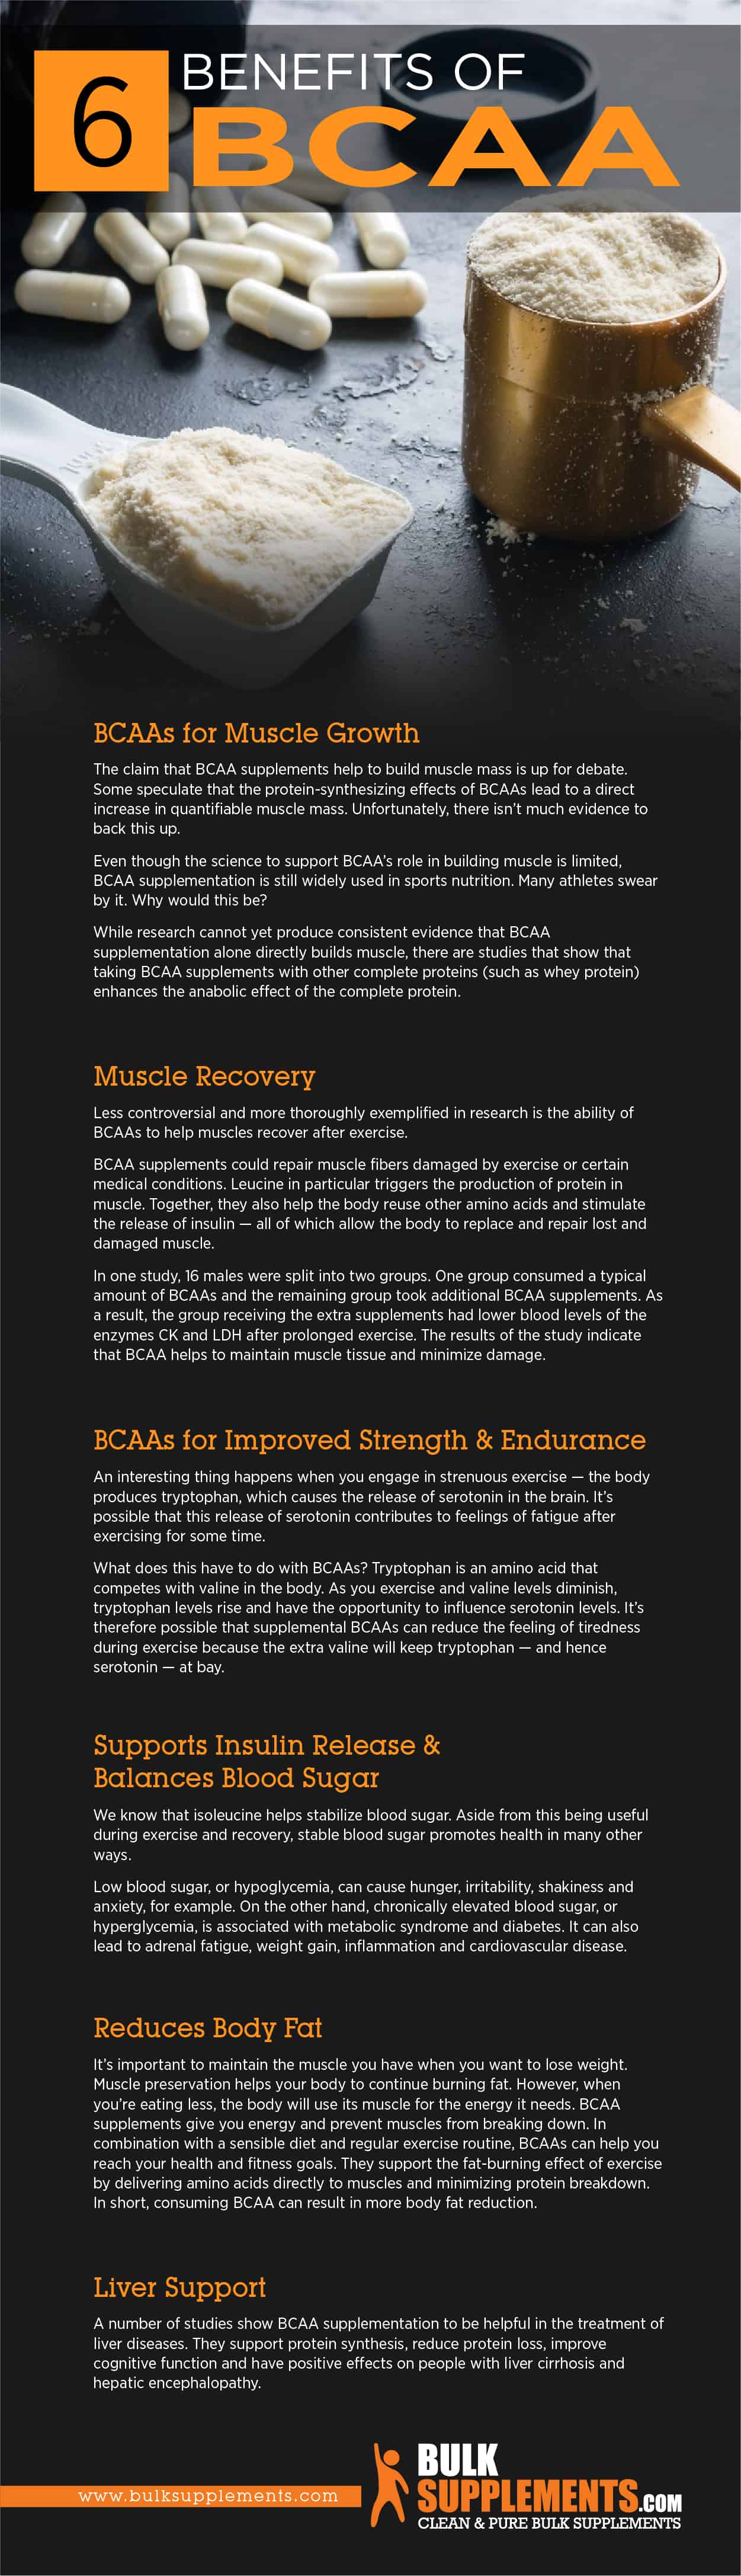 Benefits of BCAA supplements